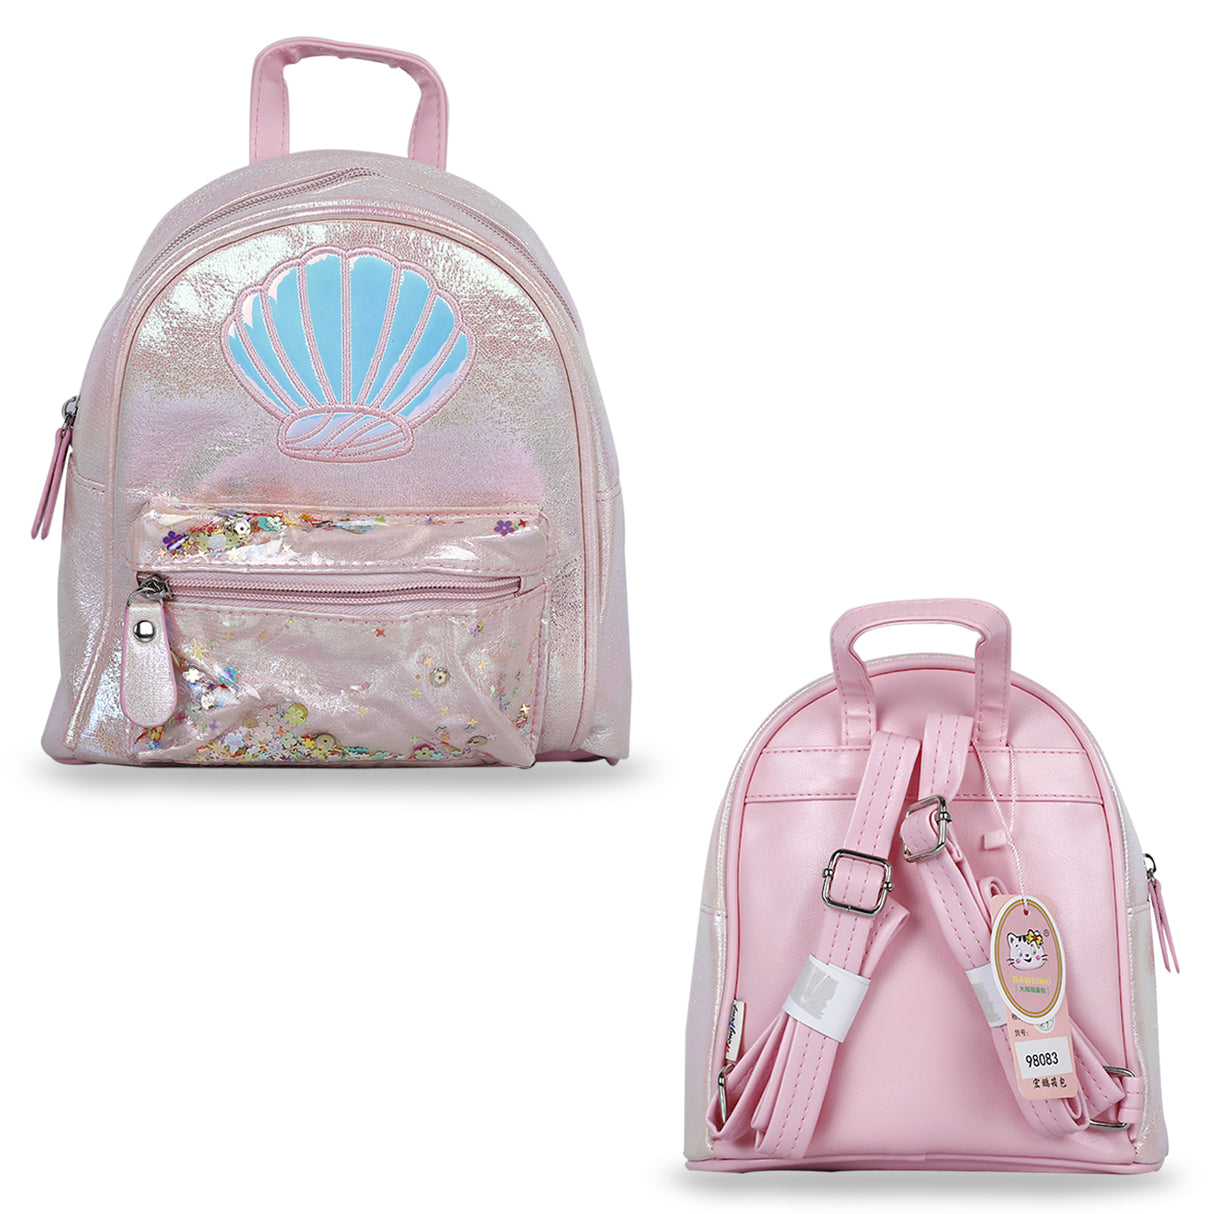 Adorable Premium Girls Backpack Bag